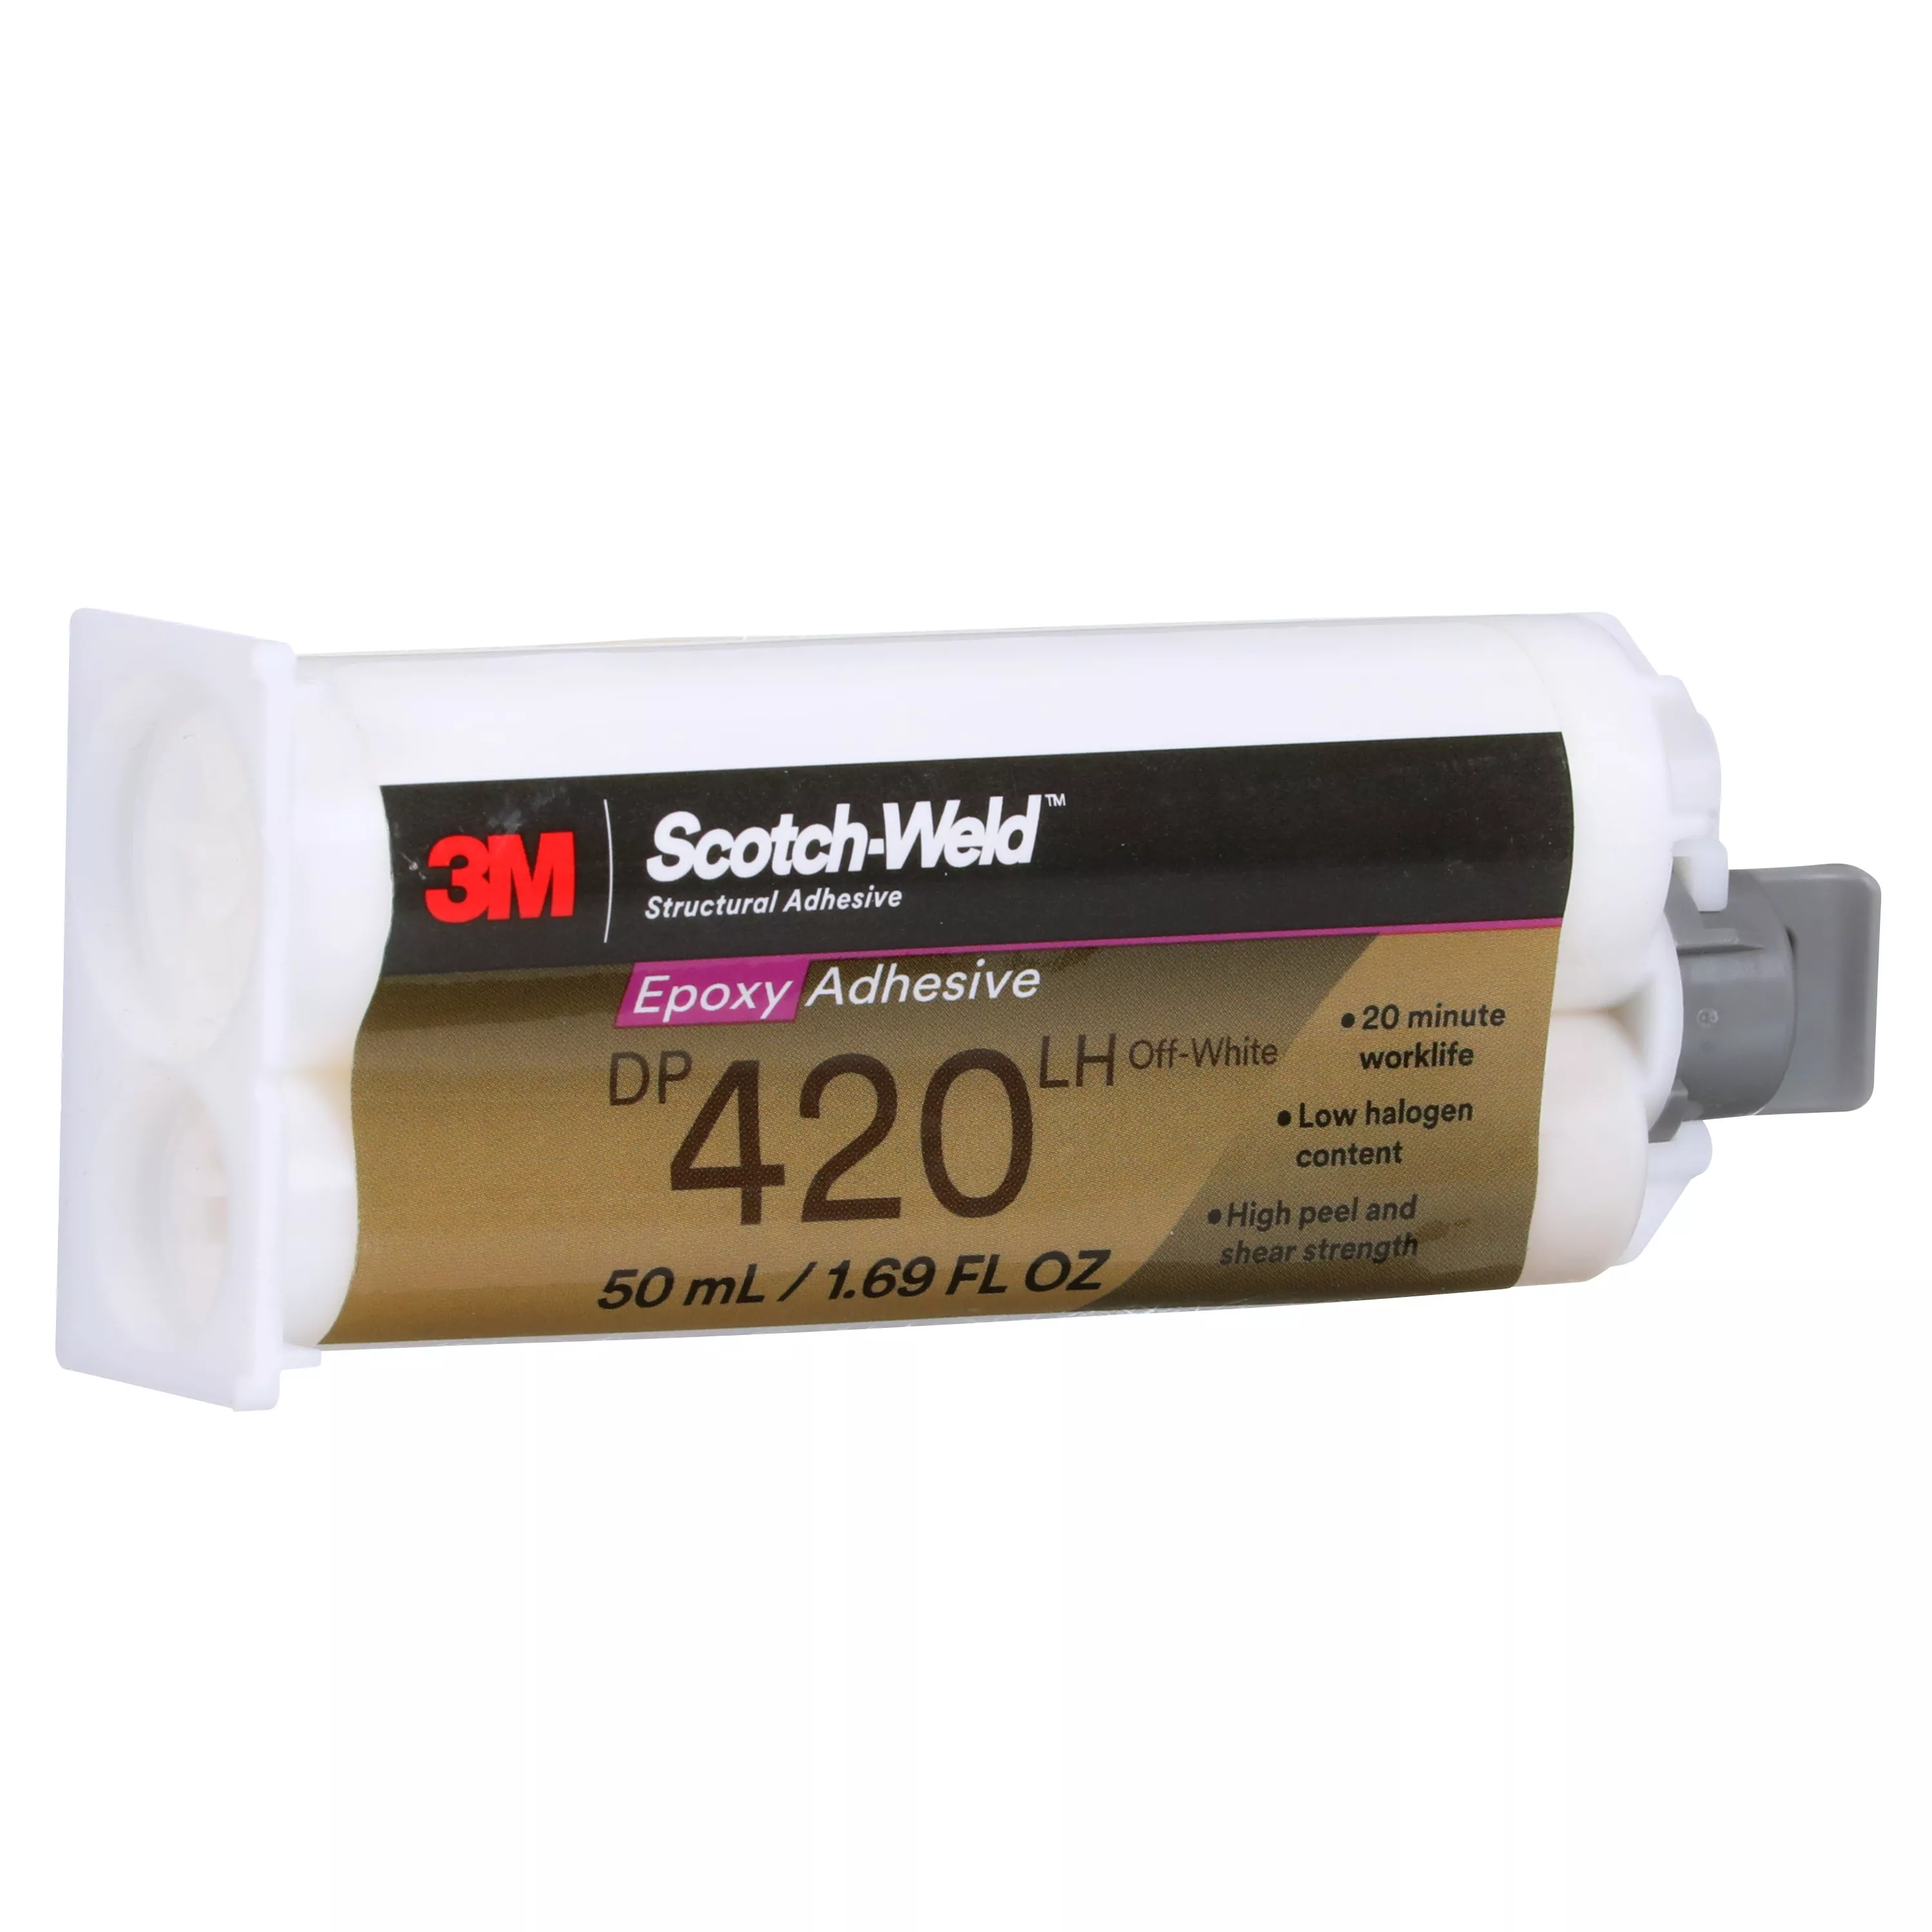 SKU 7100148736 | 3M™ Scotch-Weld™ Epoxy Adhesive DP420